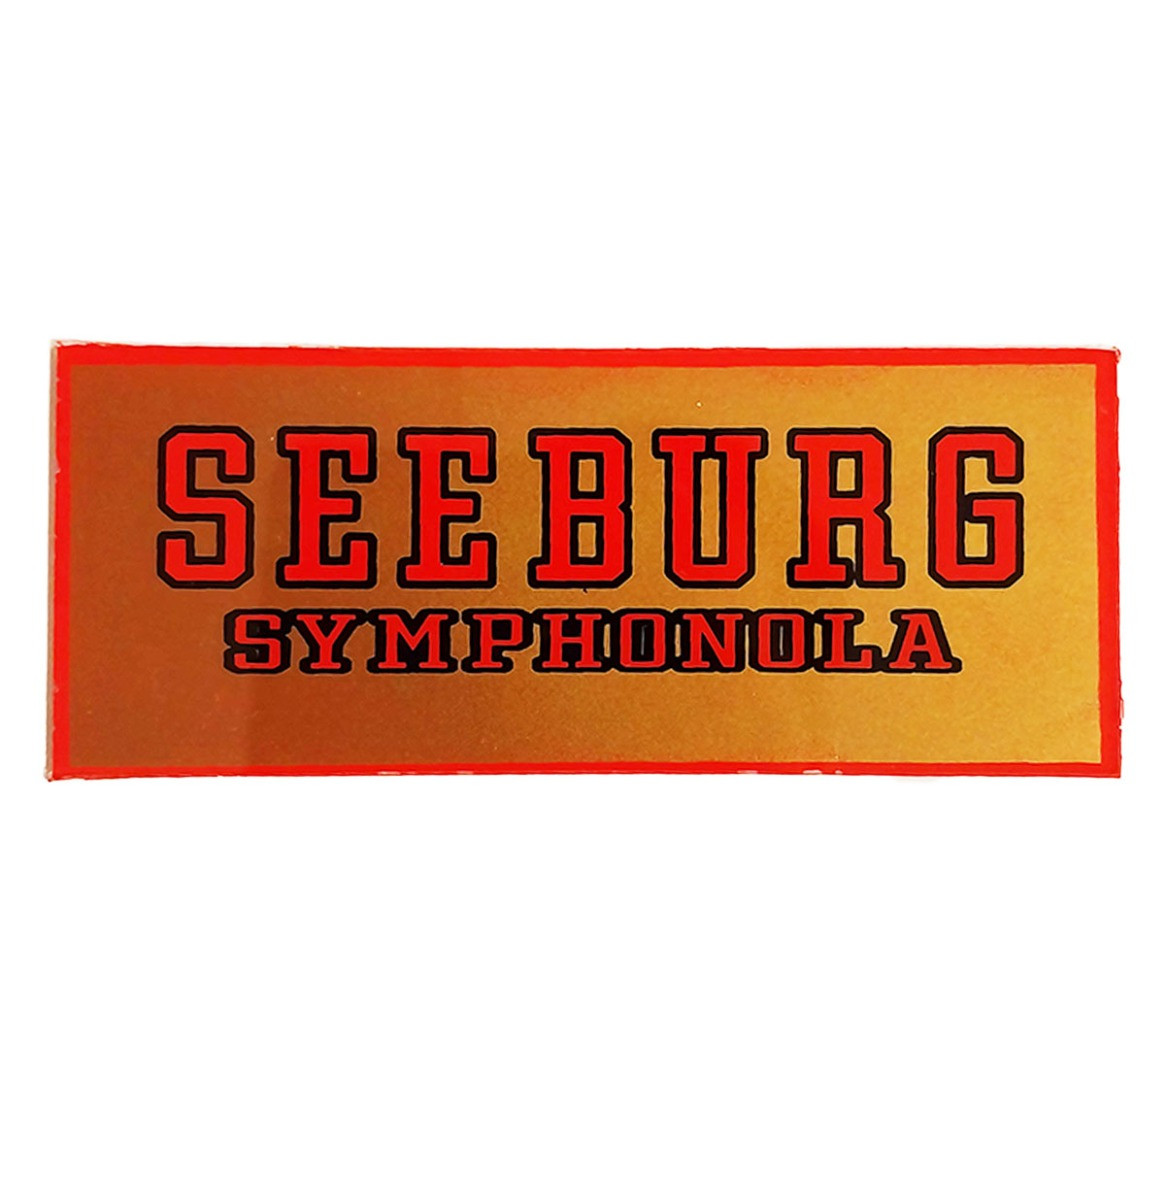 Seeburg Symphonola Logo Kaart